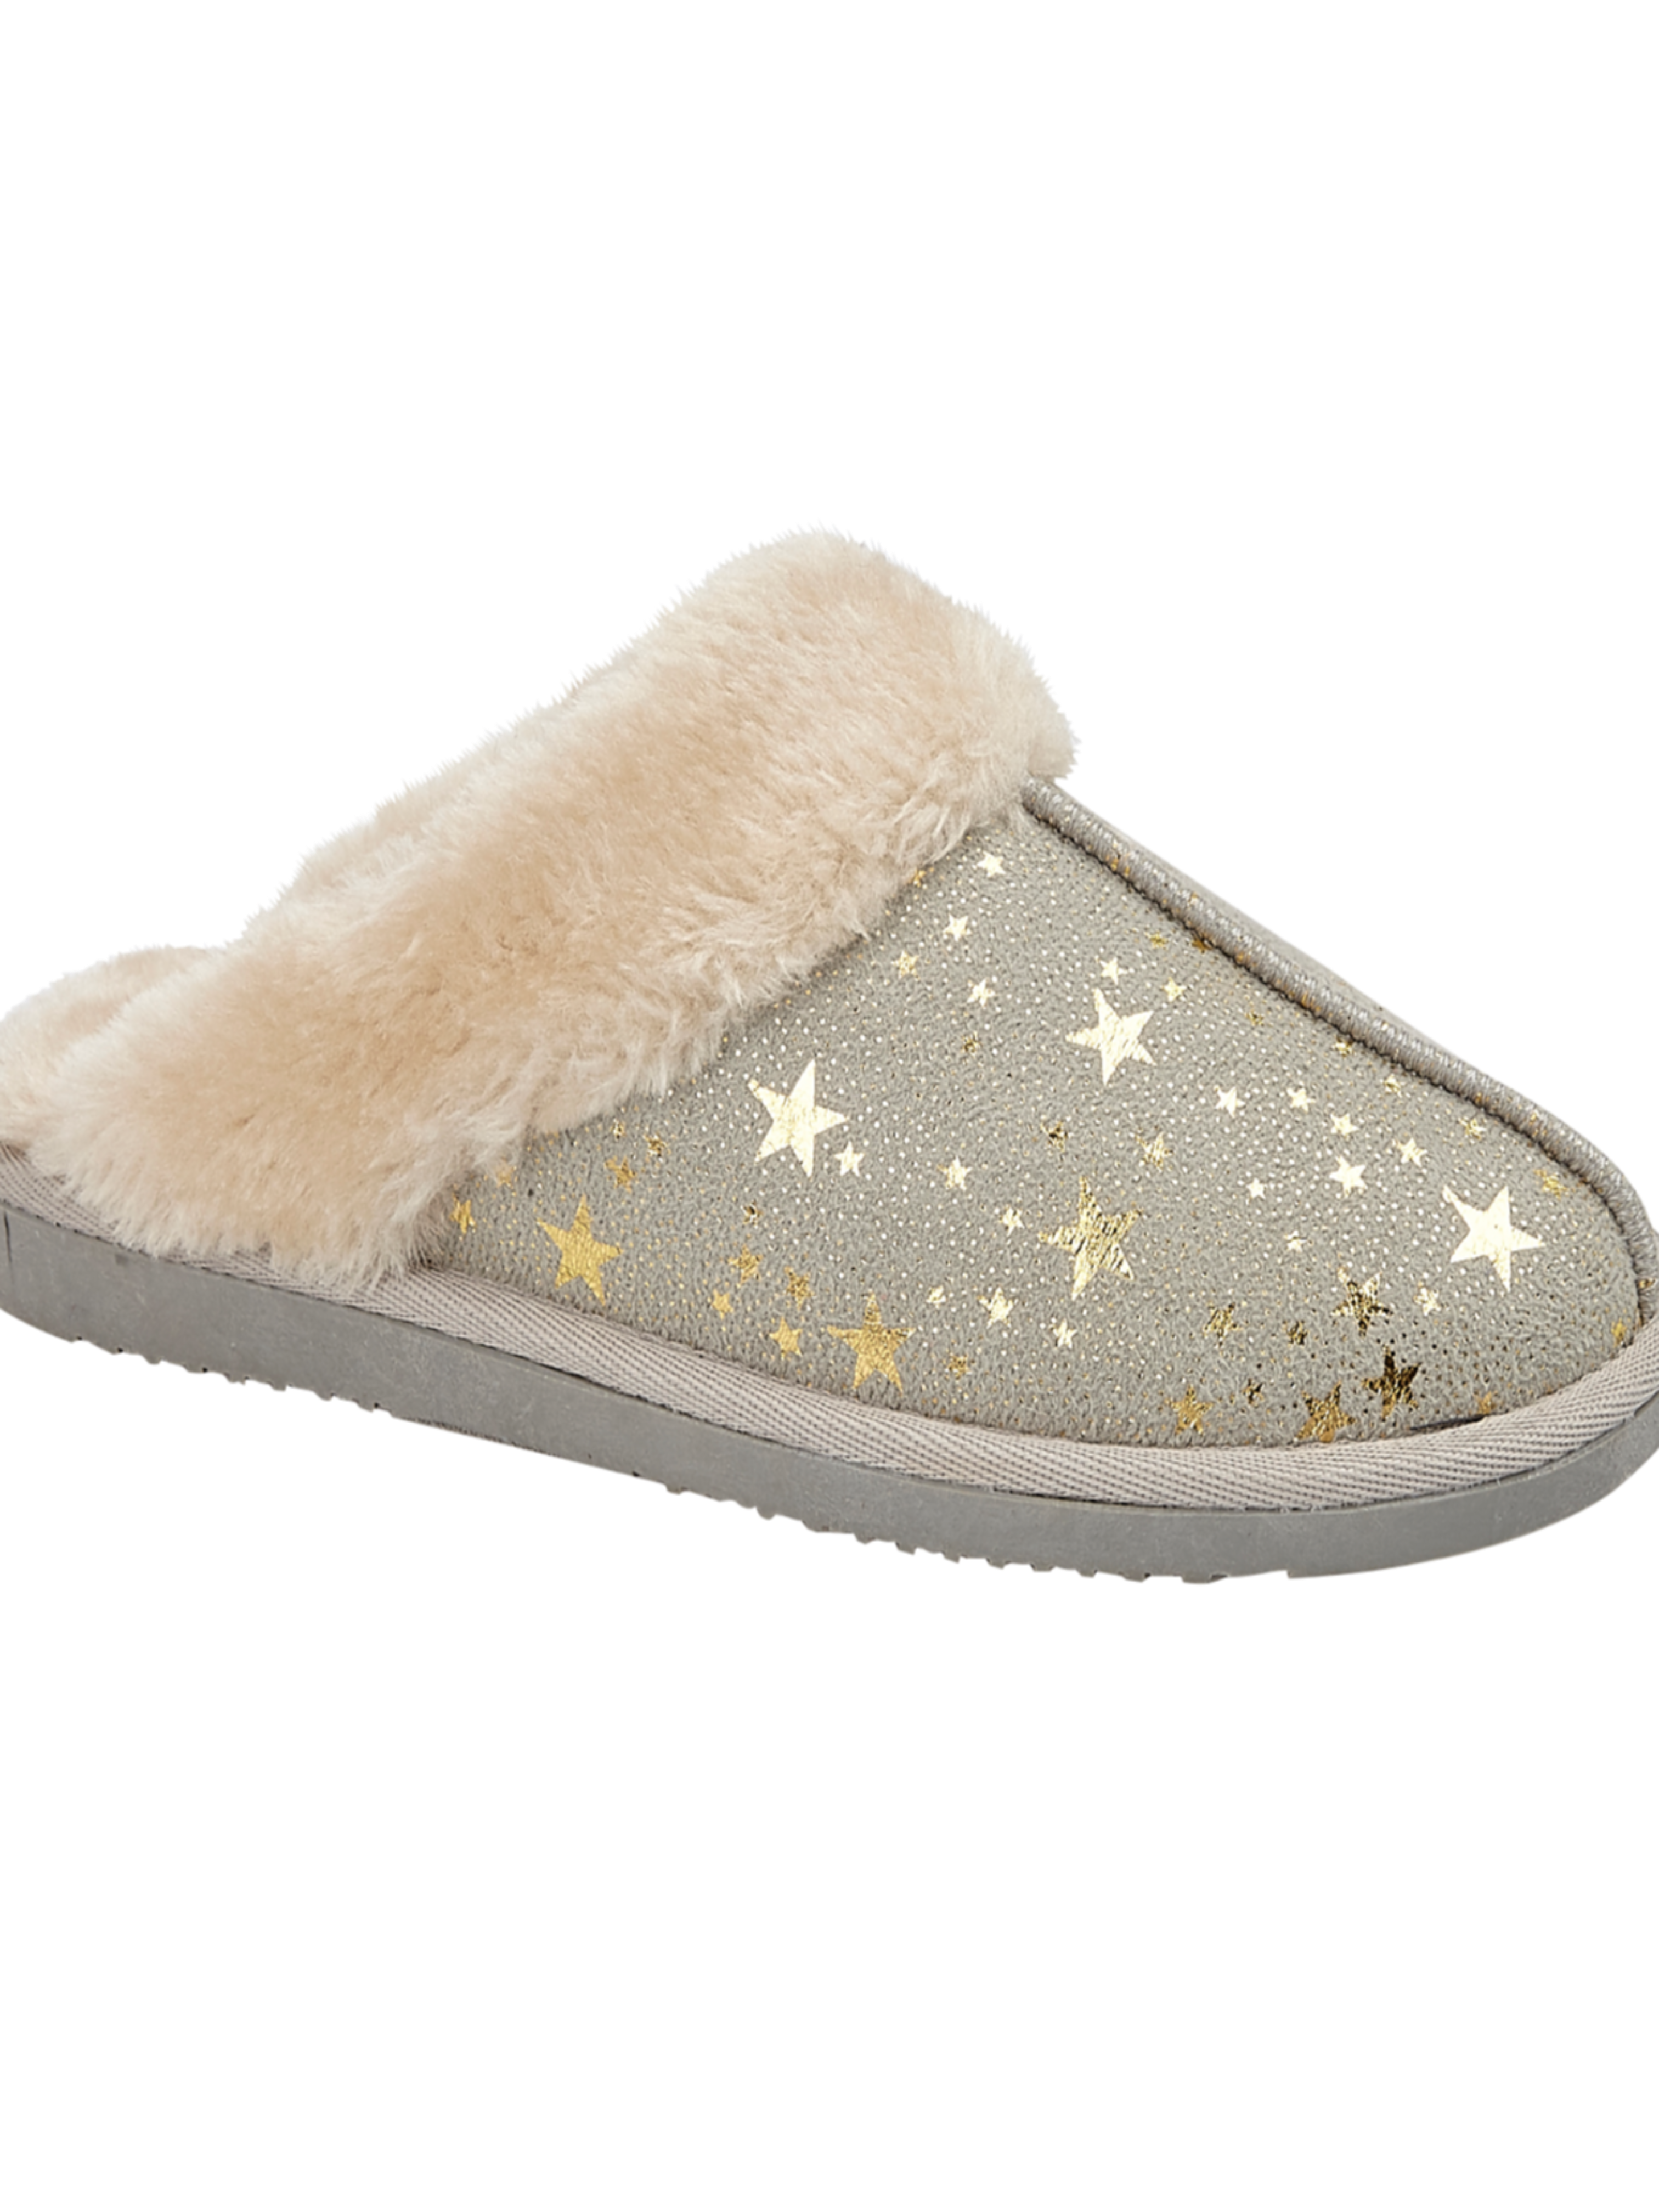 Light Grey Slipper with Gold Stars